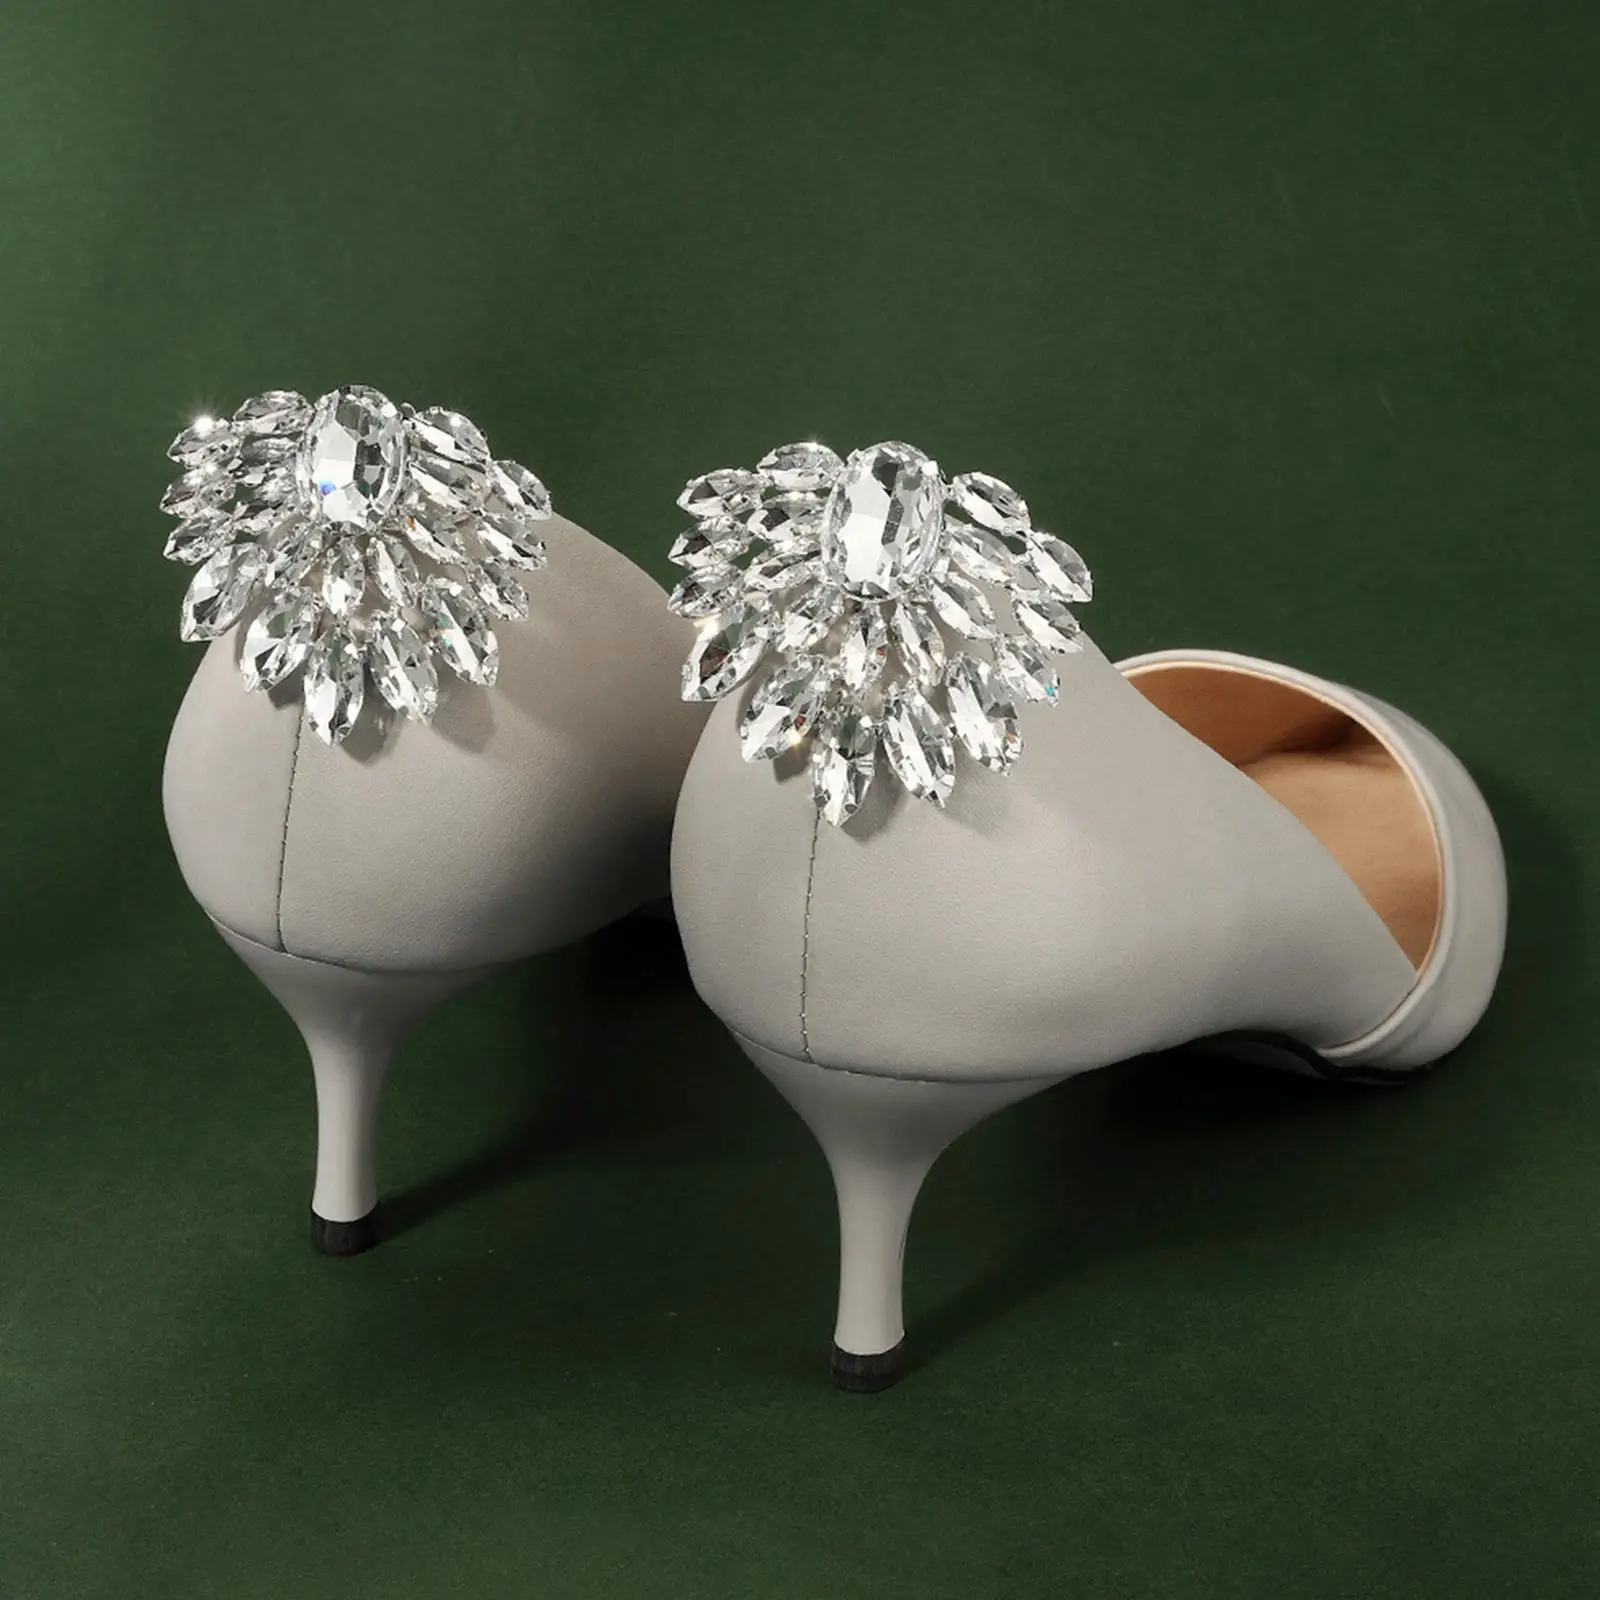 2x Decorative Shoes Clips Bridal Shoes Charm Floral Detachable Craft Garment Accessories Jewelry for Banquet Party Decoration